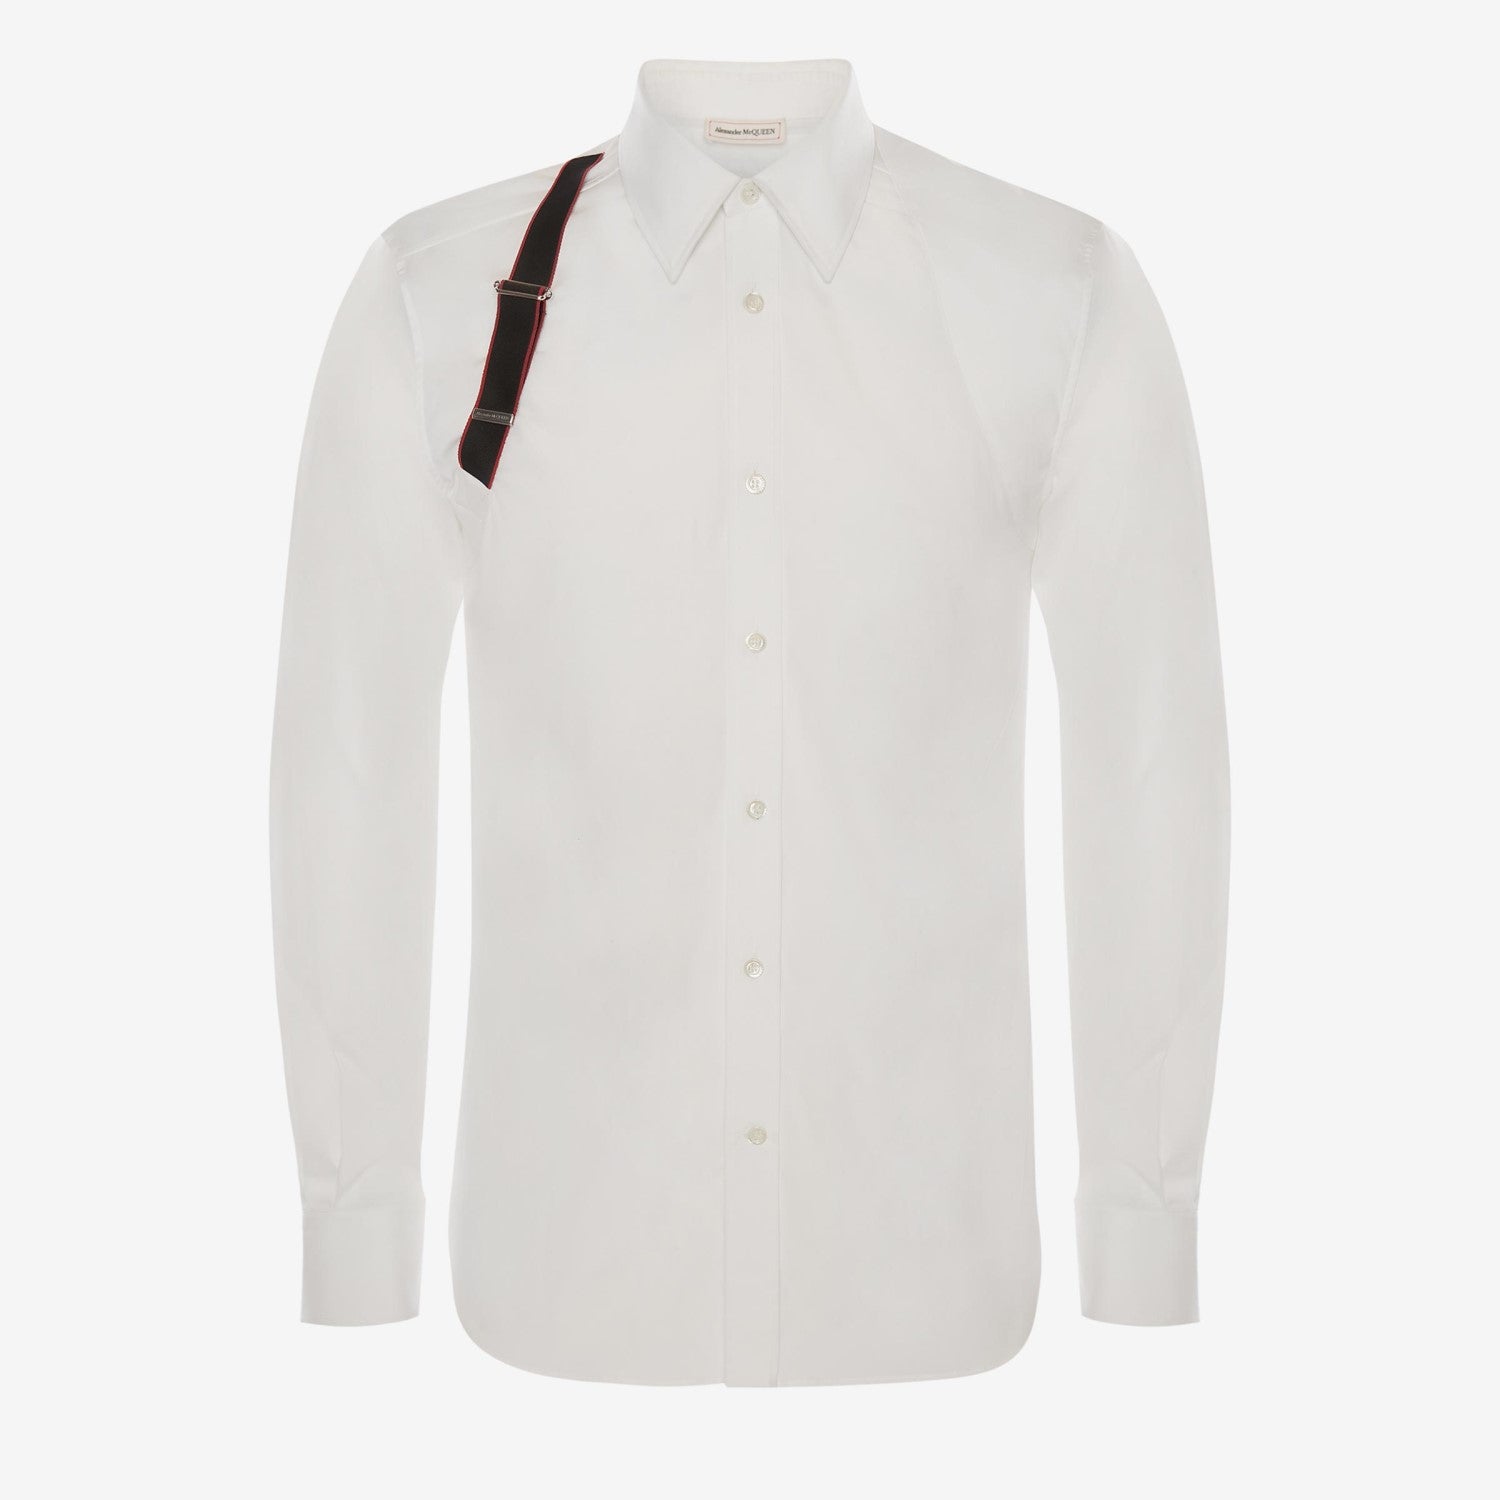 Men's Alexander McQueen Signature Harness Shirt in White